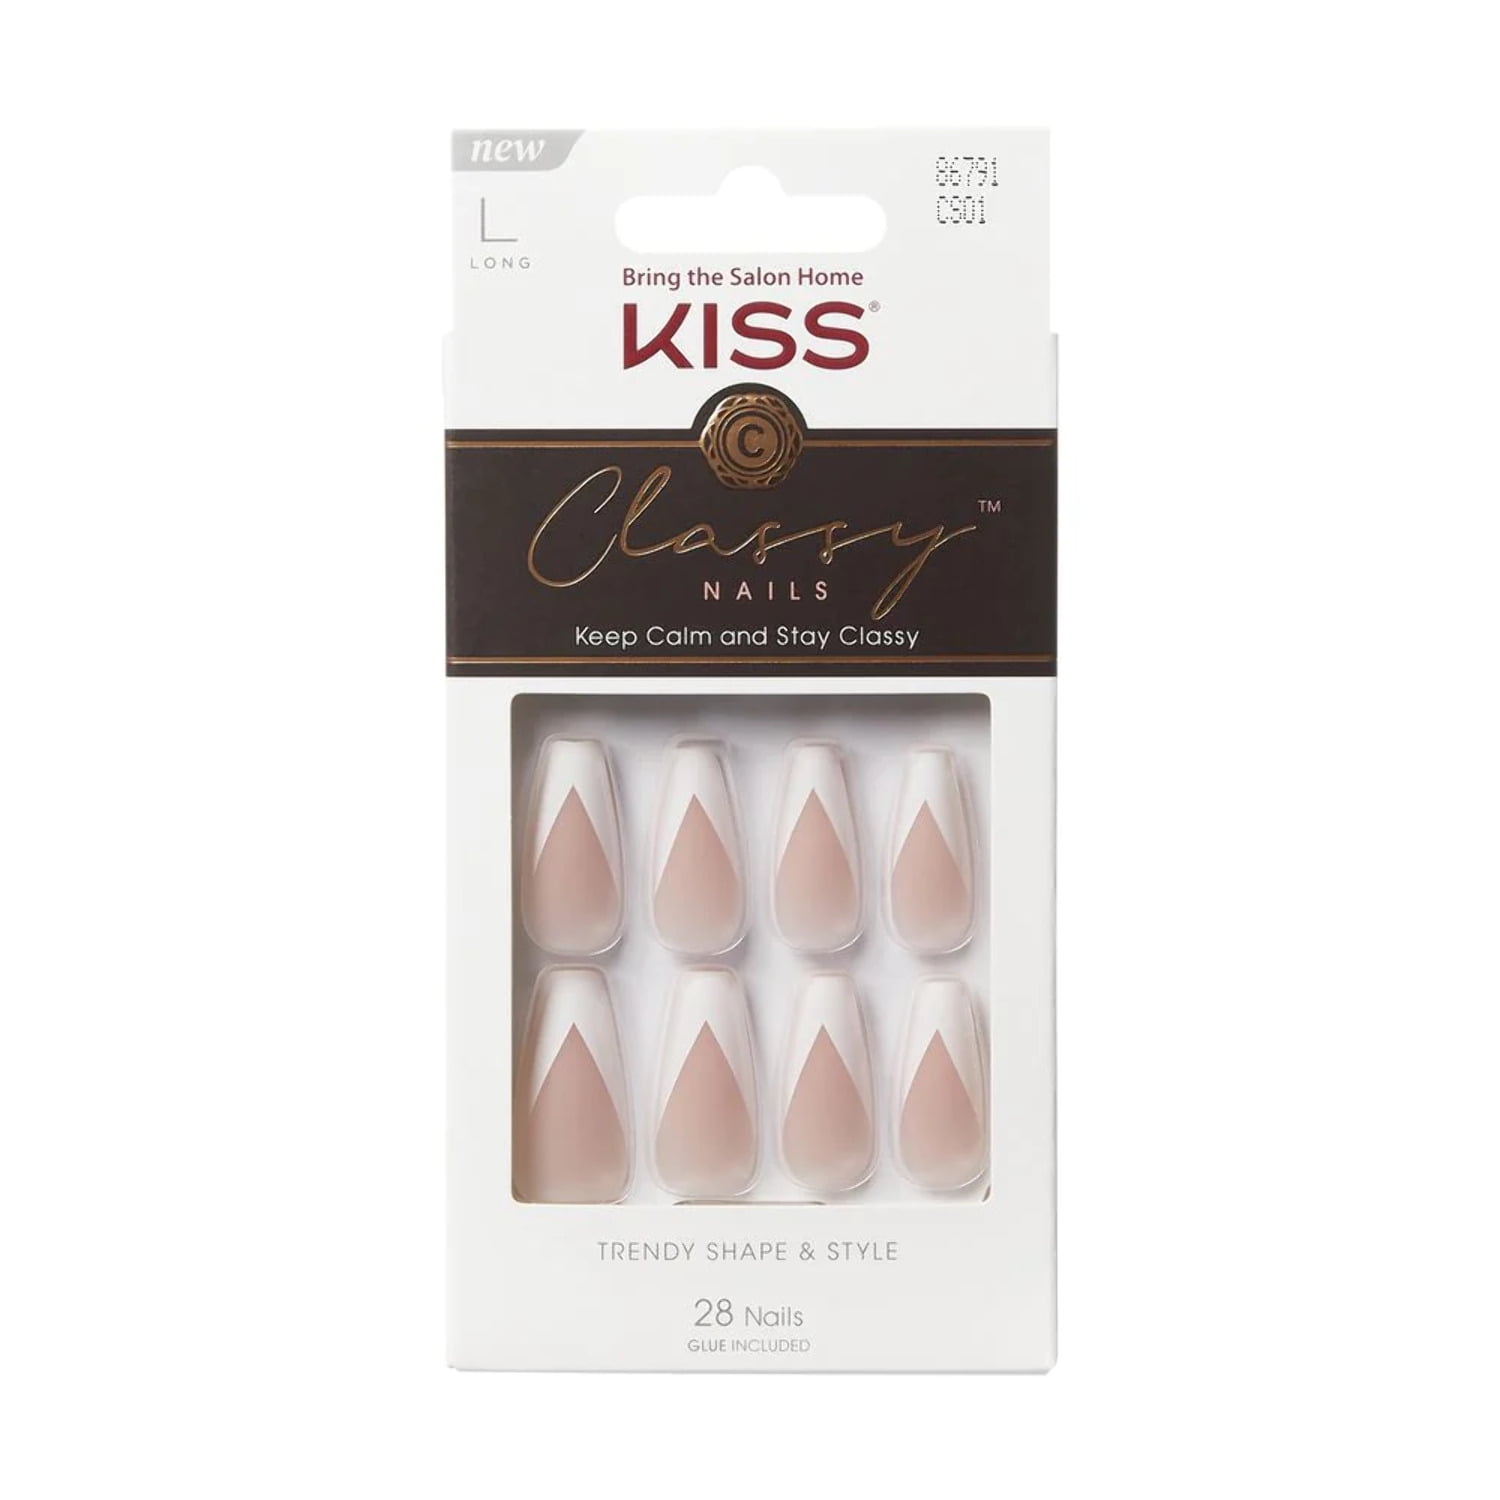 KISS Classy Nails, You're Gorgeous, Long, Coffin - Walmart.com